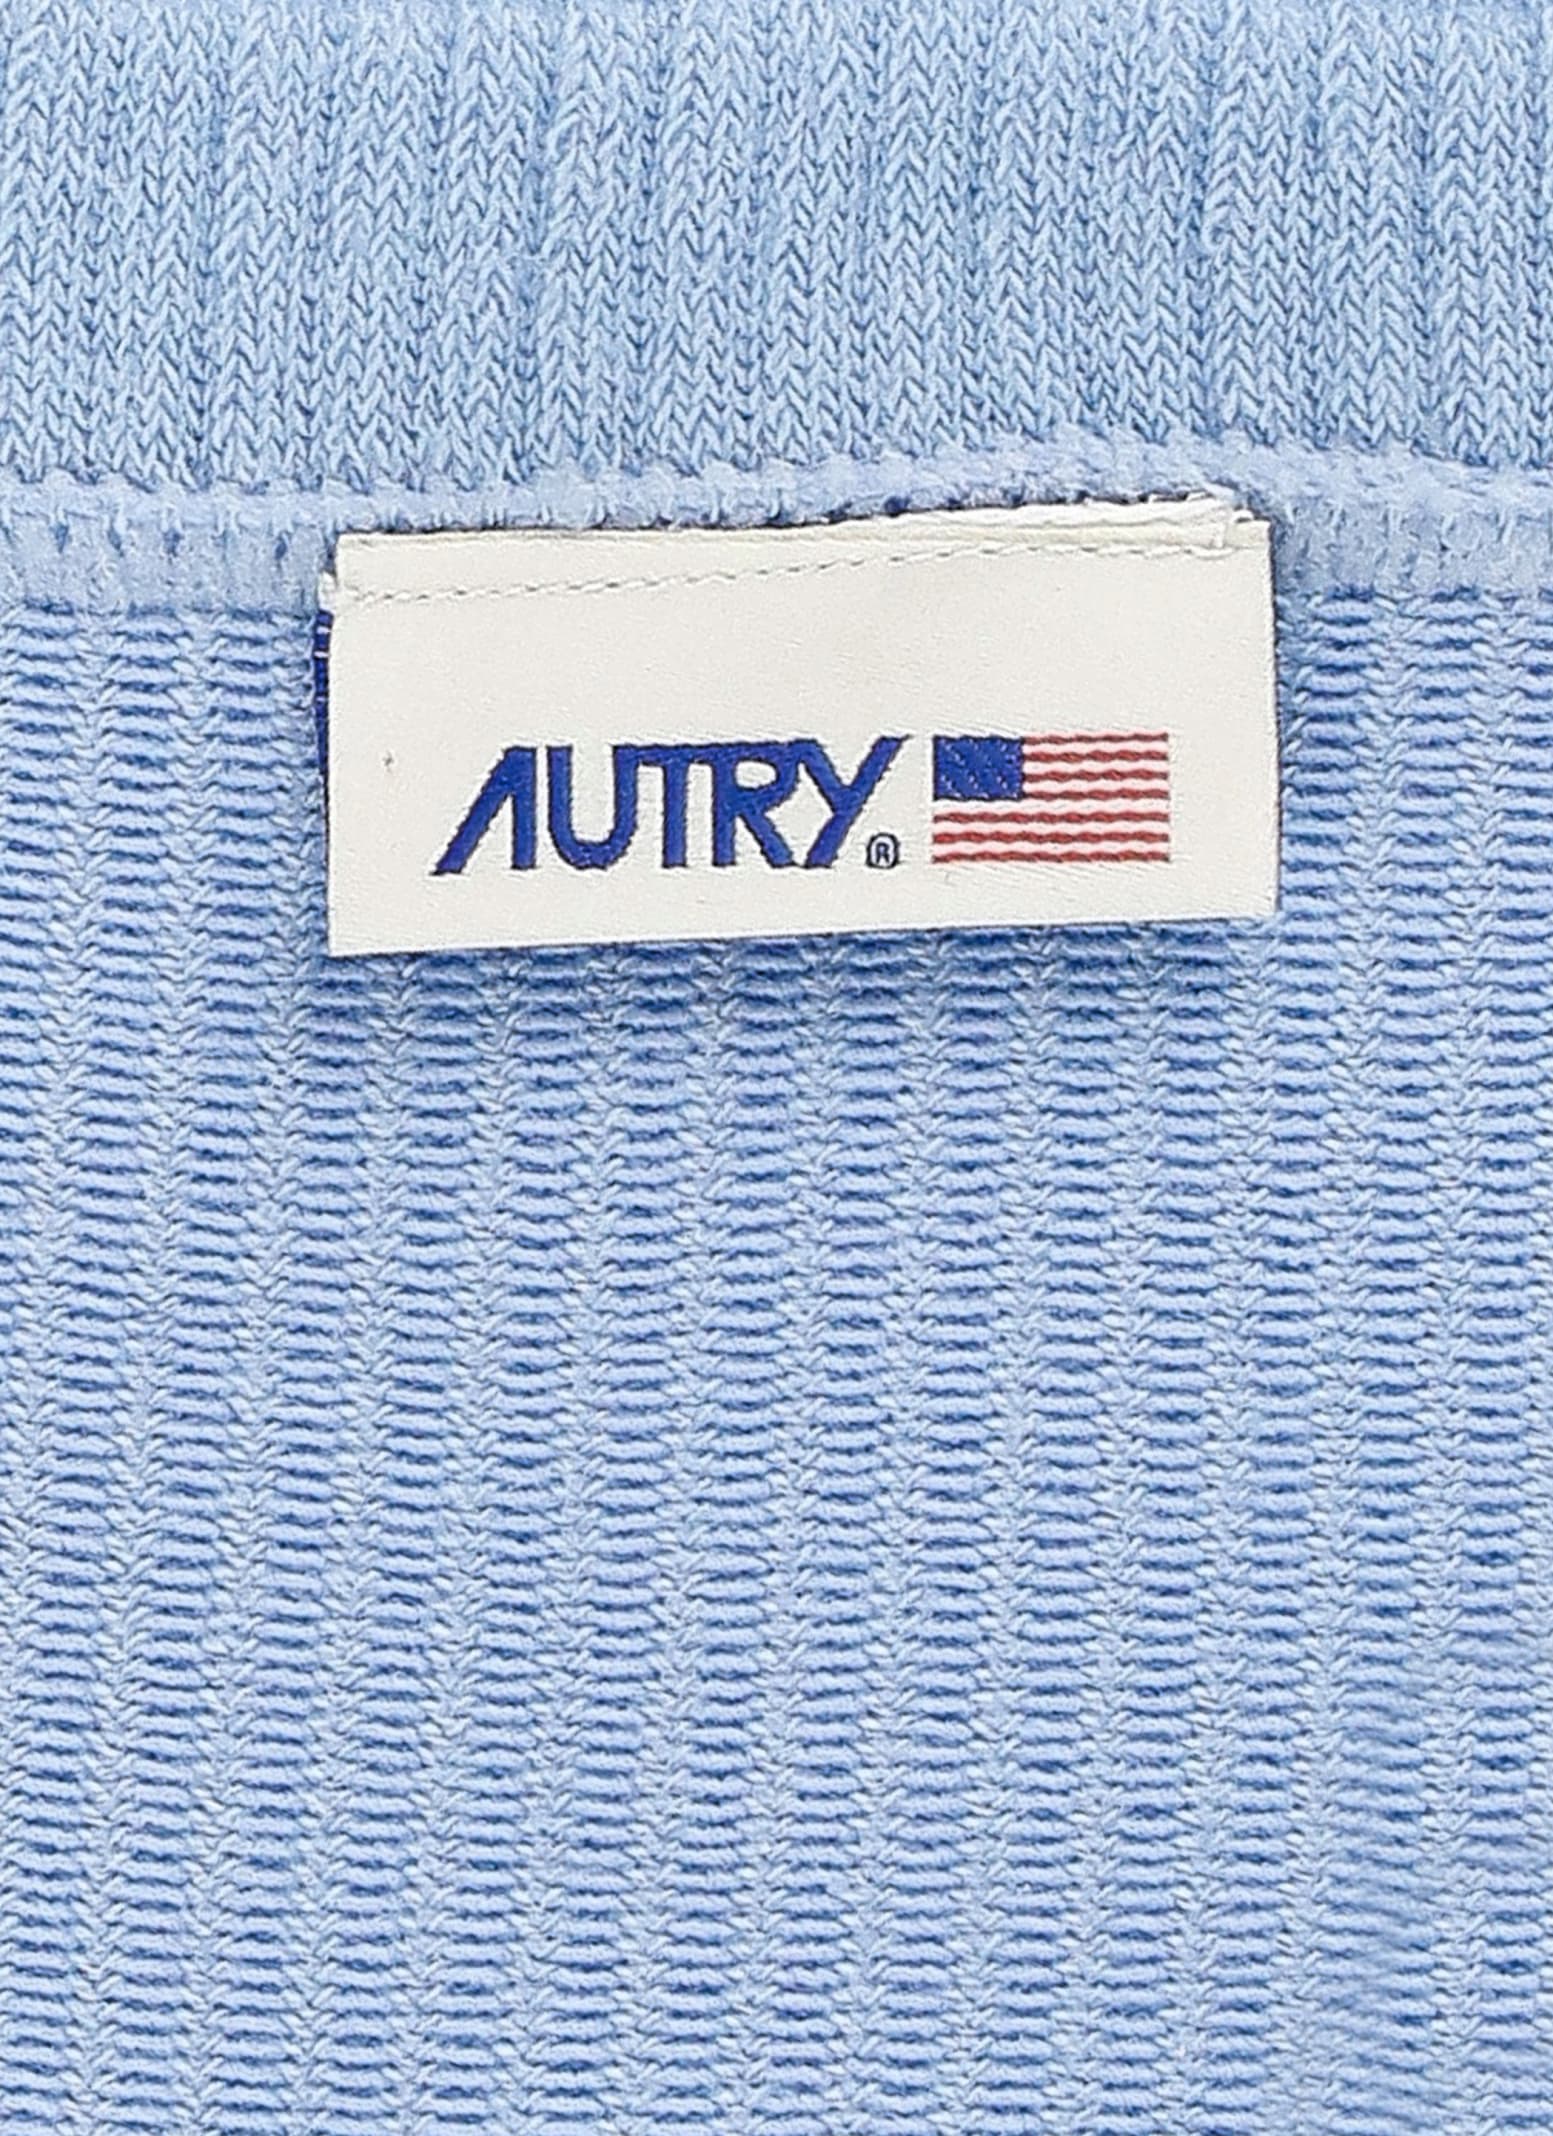 Shop Autry Cotton Socks In Light Blue